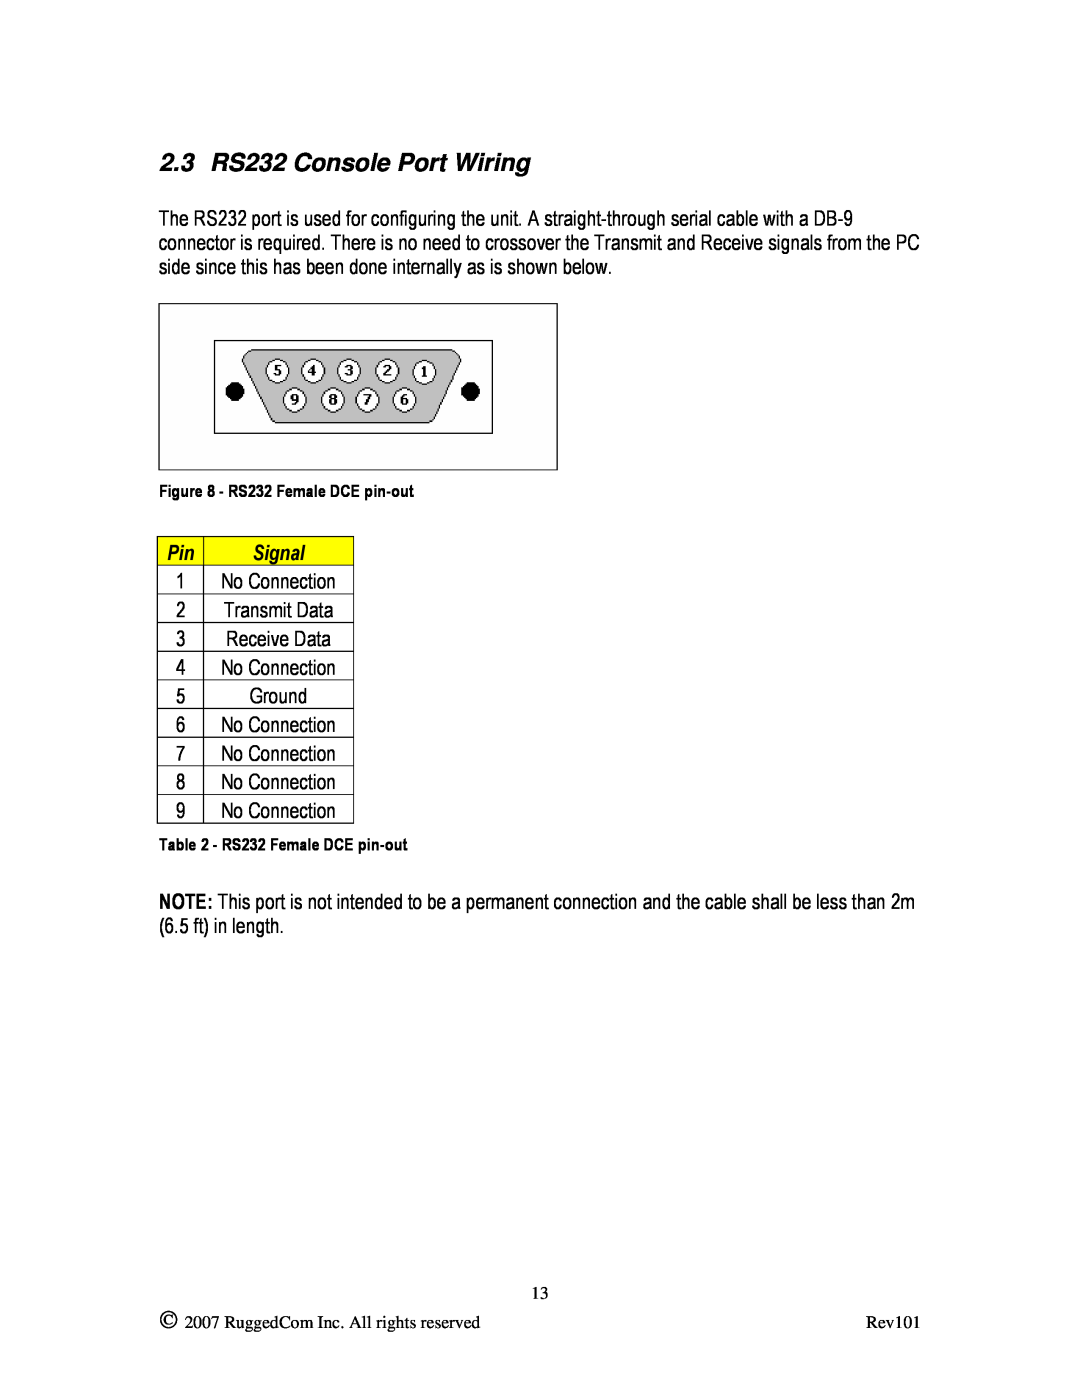 RuggedCom RS900L manual 2.3 RS232 Console Port Wiring 